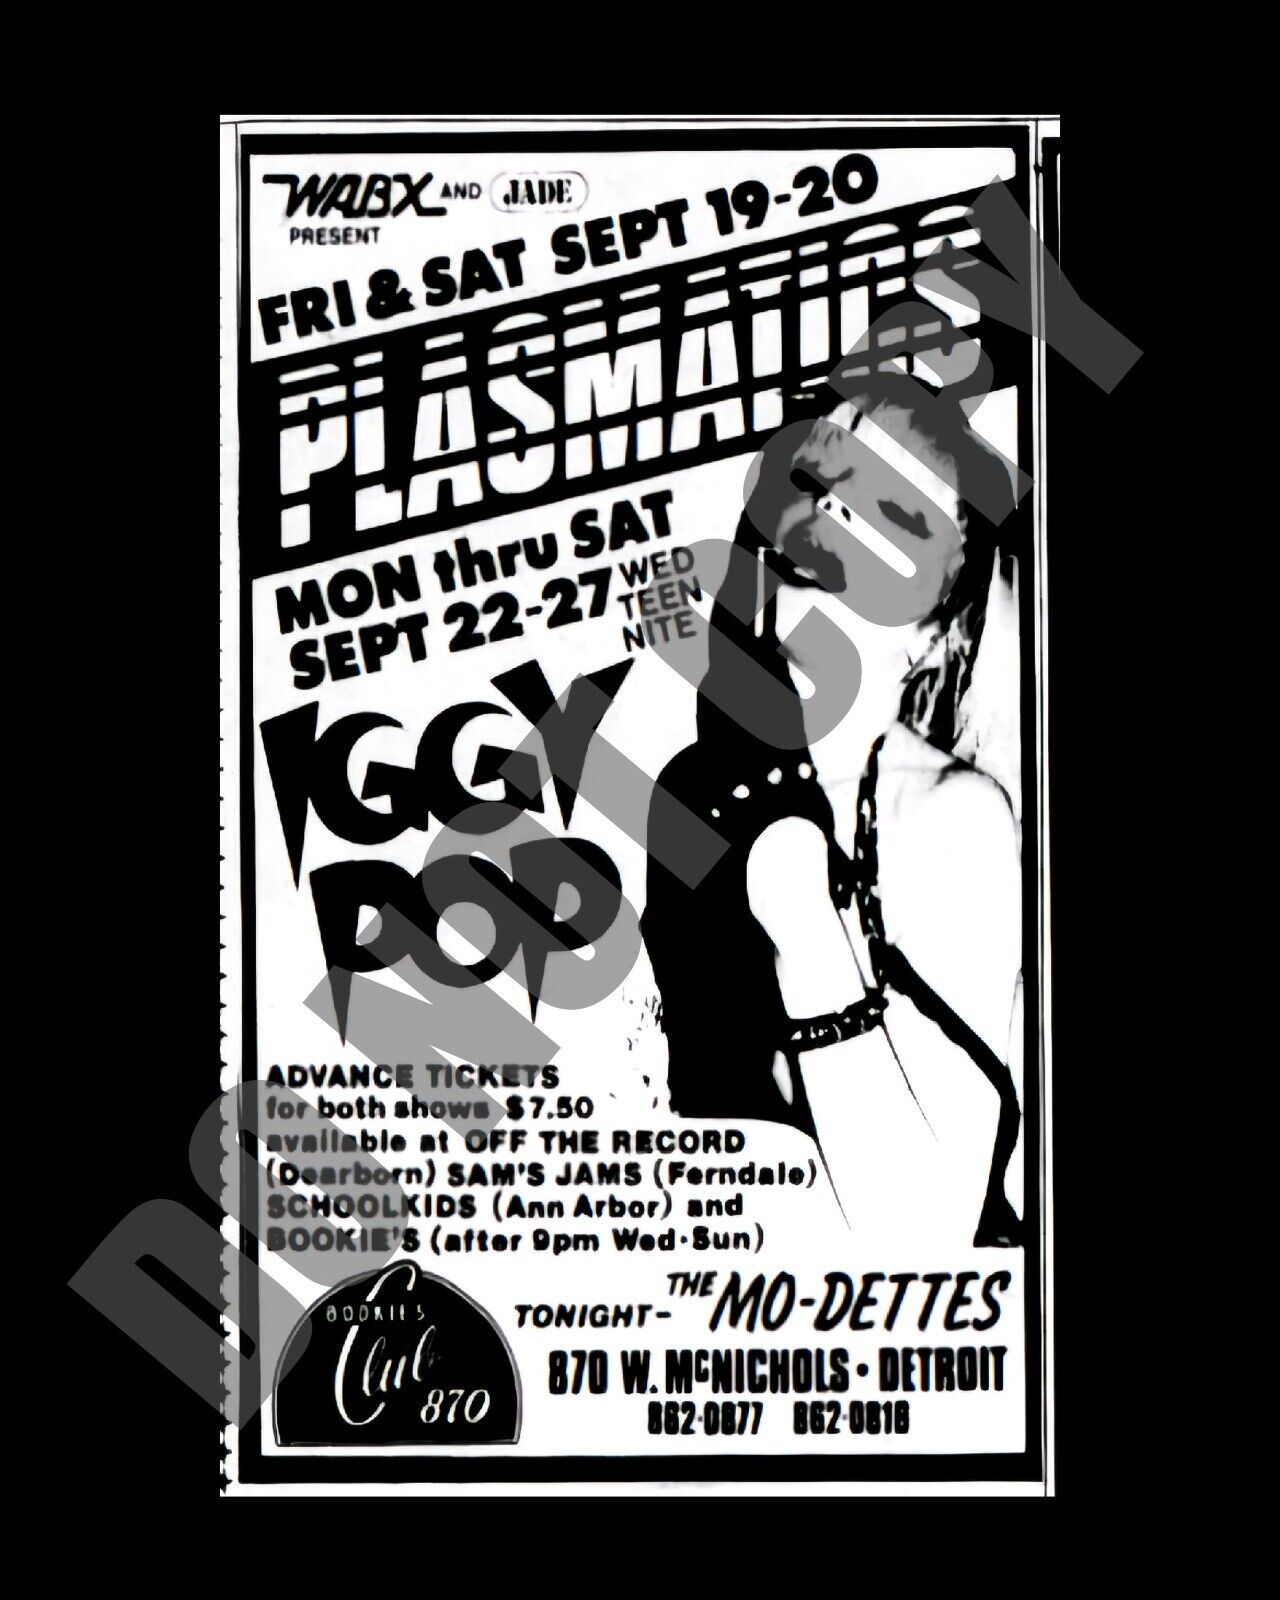 1980 WABX Plasmatics Iggy Pop Concert At Bookies Club 870 In Detroit 8x10 Photo